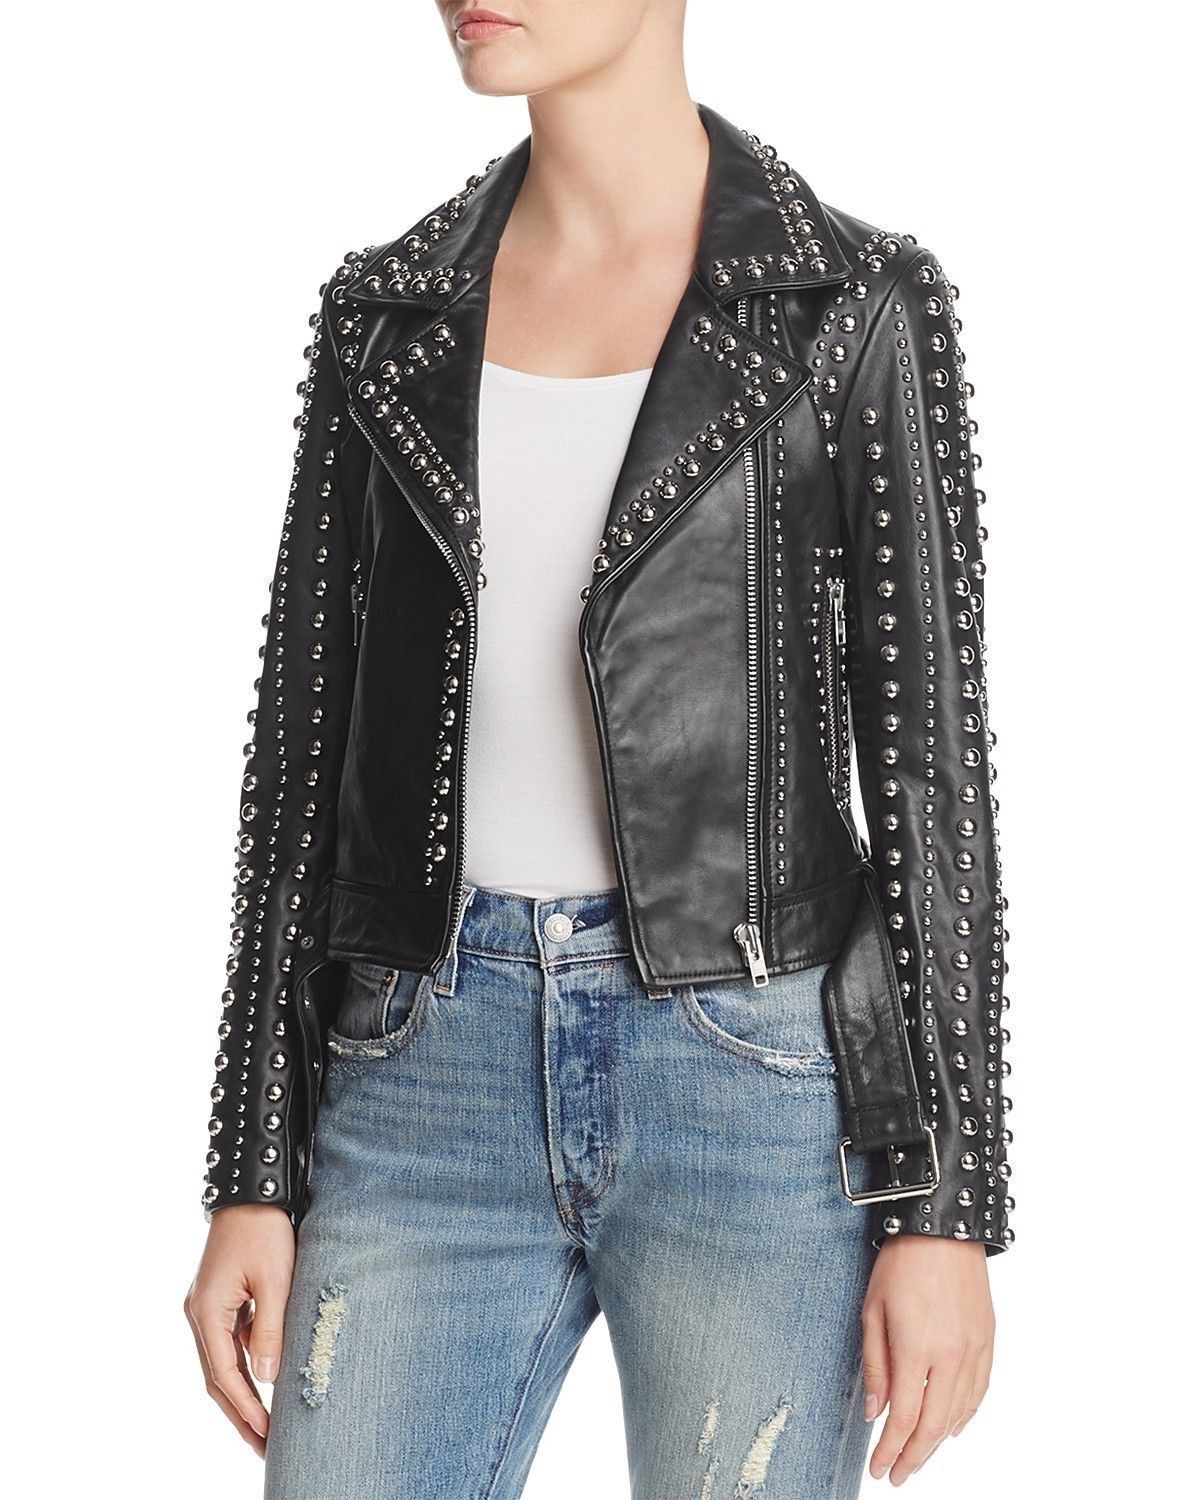 New Rebecca Minkoff Adelia Black Punk Silver Studded Leather Jacket 2019